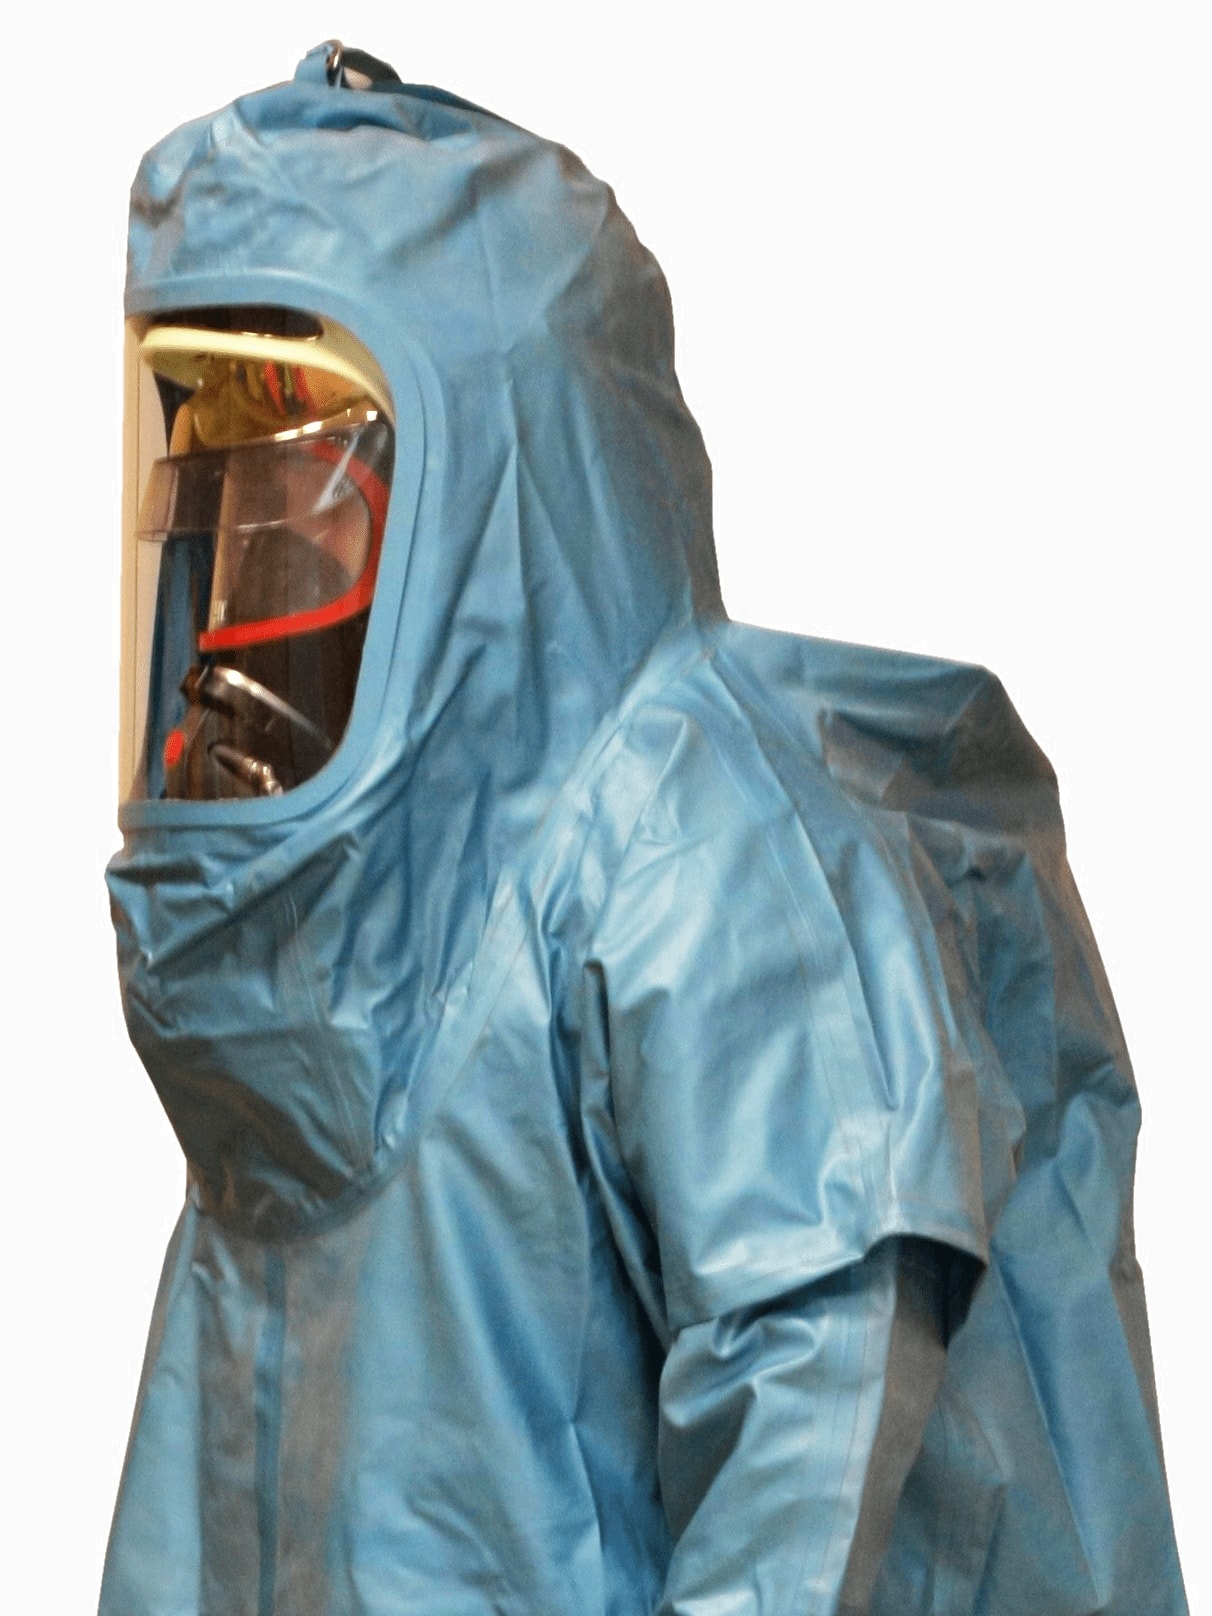 Костюм изолирующий защита. Комплект изолирующий химический ких-4 (ких -5). Ких-4 костюм изолирующий химический. Костюм химзащиты Витязь. Костюм изолирующий теплозащитный ИК-ТГЗ.